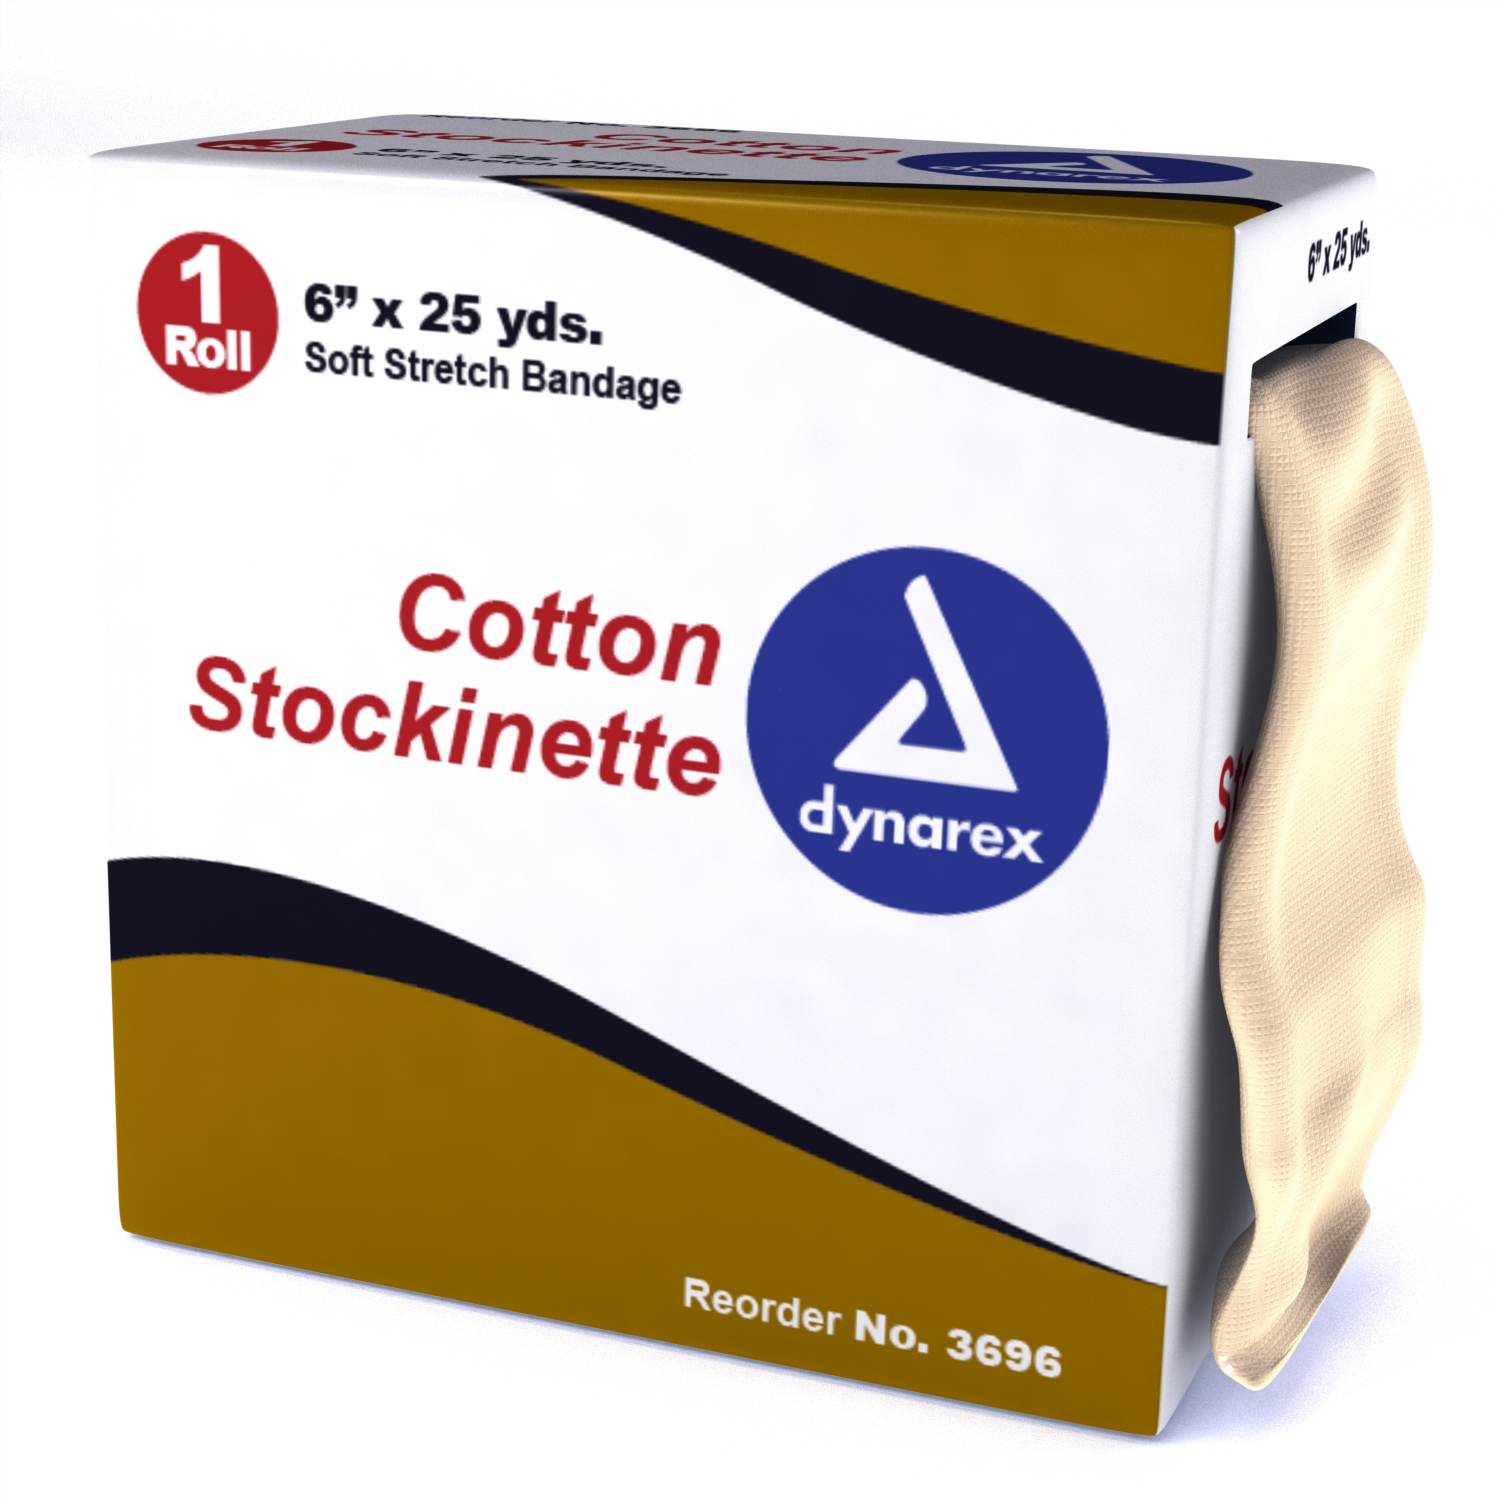 Cotton Stockinette - 6" x 25 yds